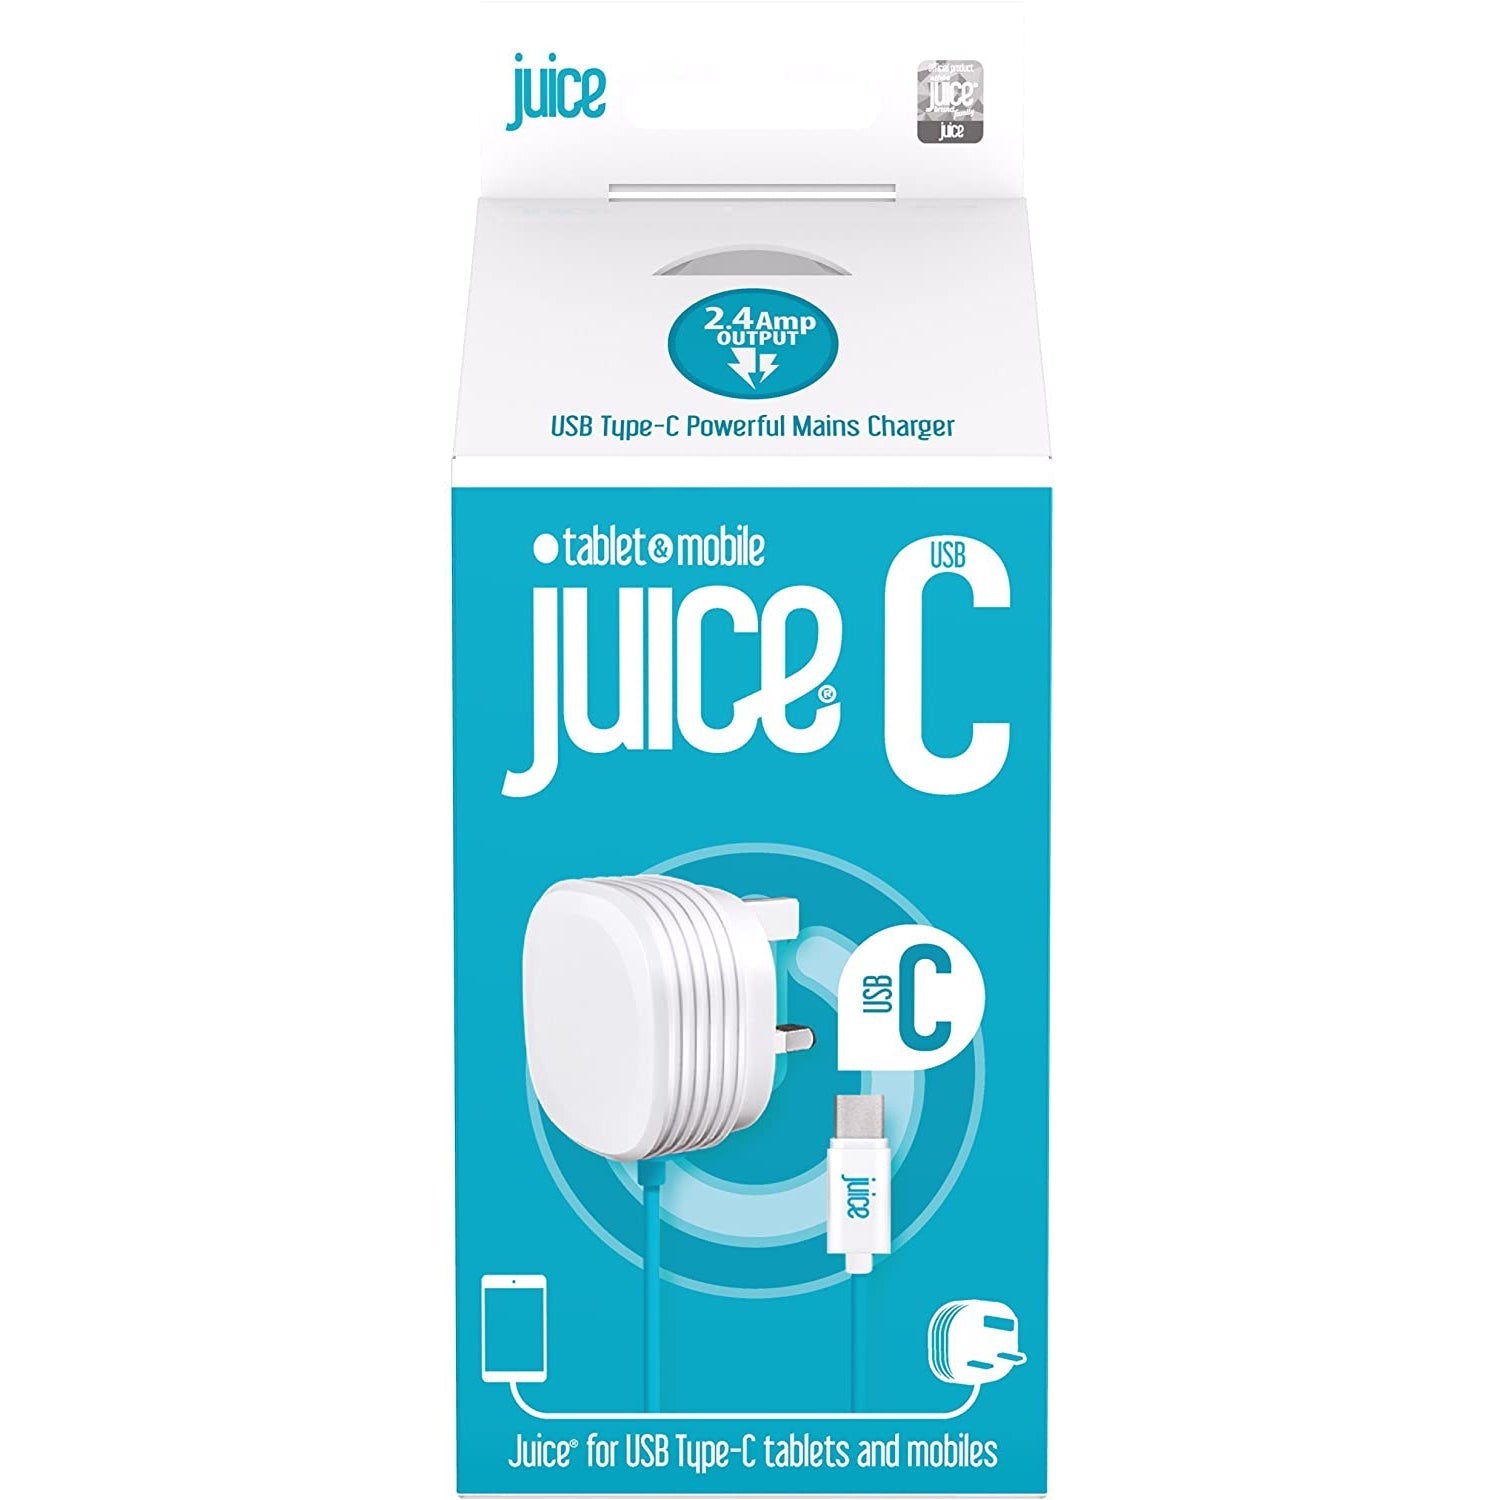 Juice USB Type-C Powerful Mains Charger 2.4 AMP - White - Refurbished Pristine